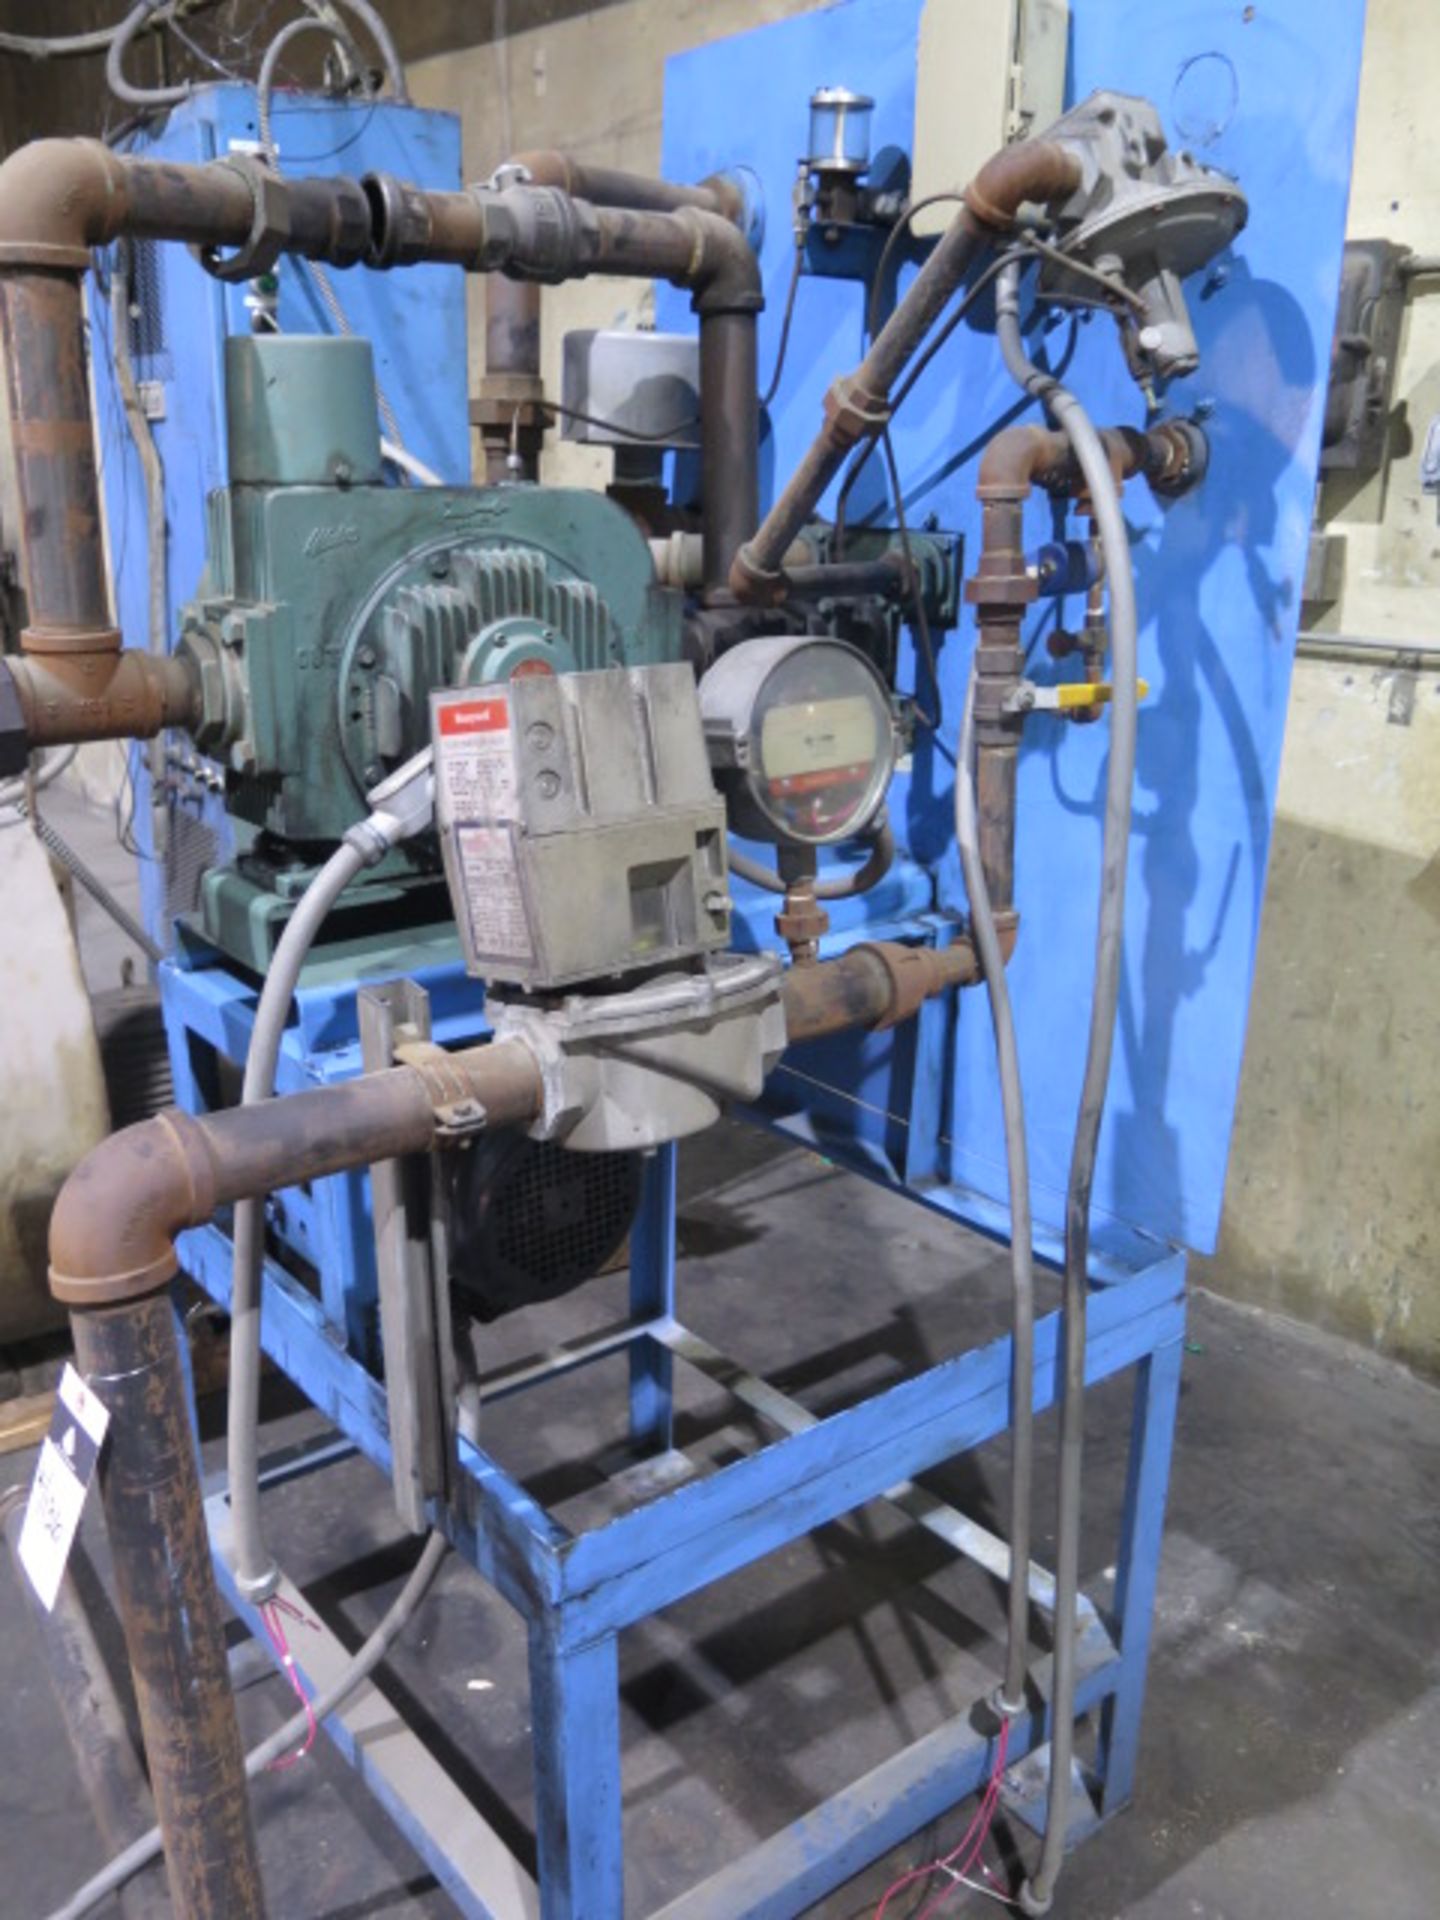 Caliform Alloy Co. “Hyen Generator” Exothermic Atmosphere Generator (For Furnaces) w/ Waukee Mixor - Image 9 of 11